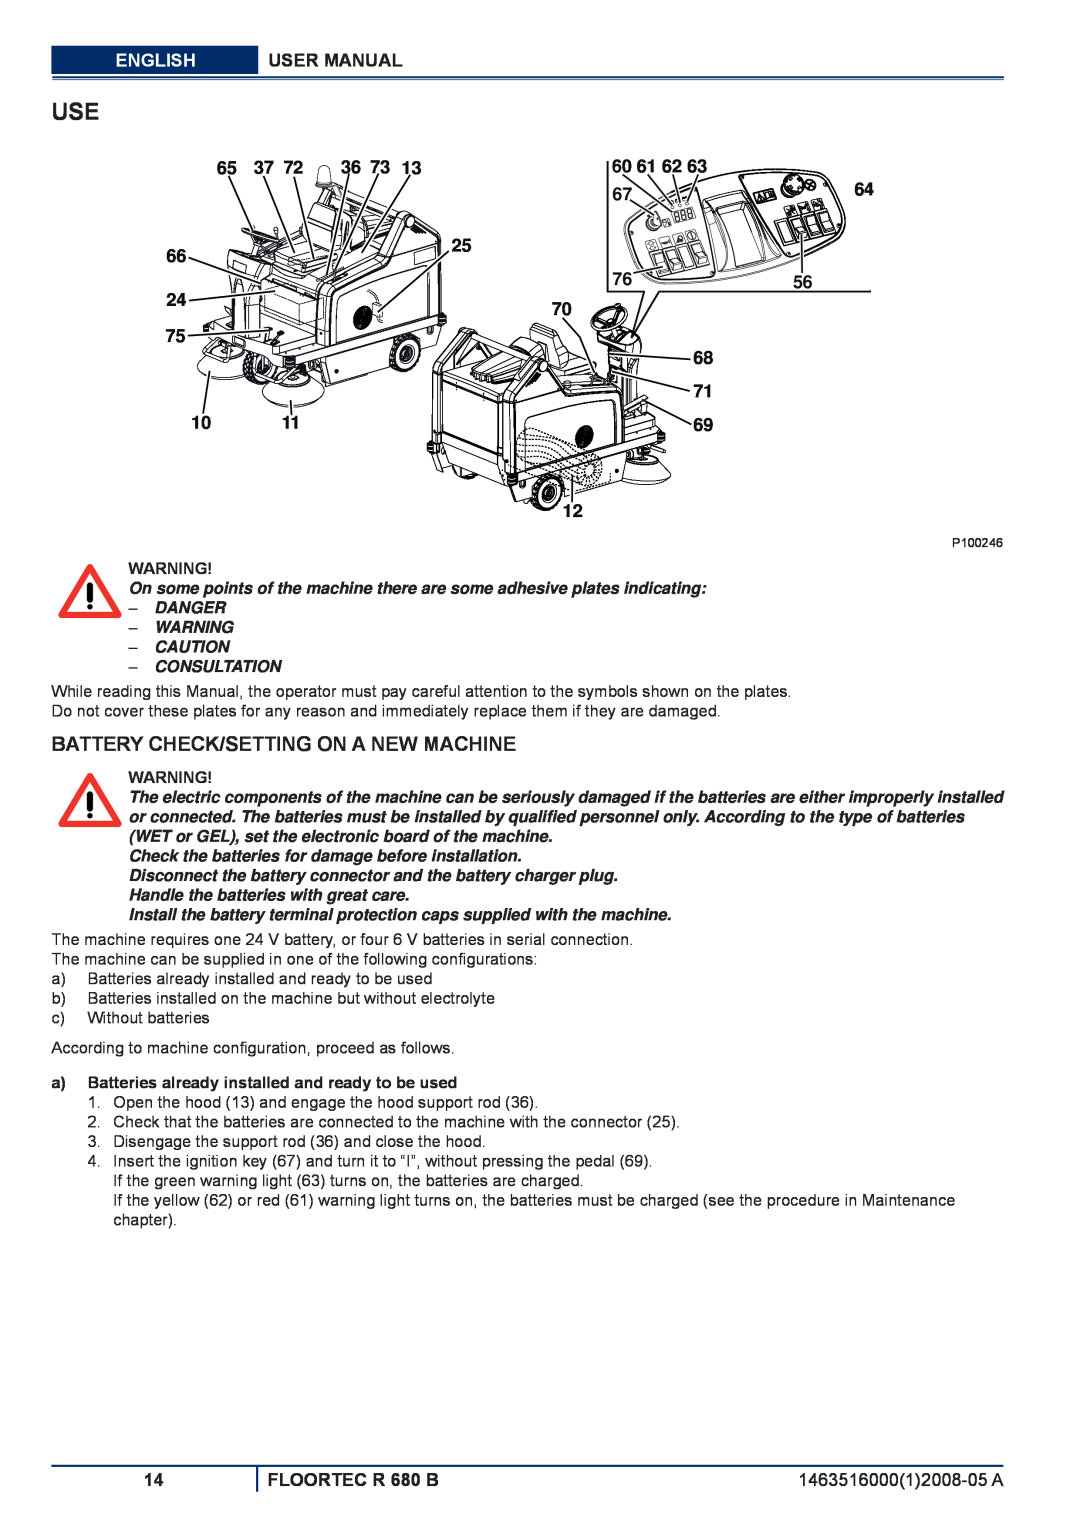 Nilfisk-ALTO R 680 B Battery Check/Setting On A New Machine, English, User Manual, 65 37 72 36 73, 60 61 62 6764, 70 68 